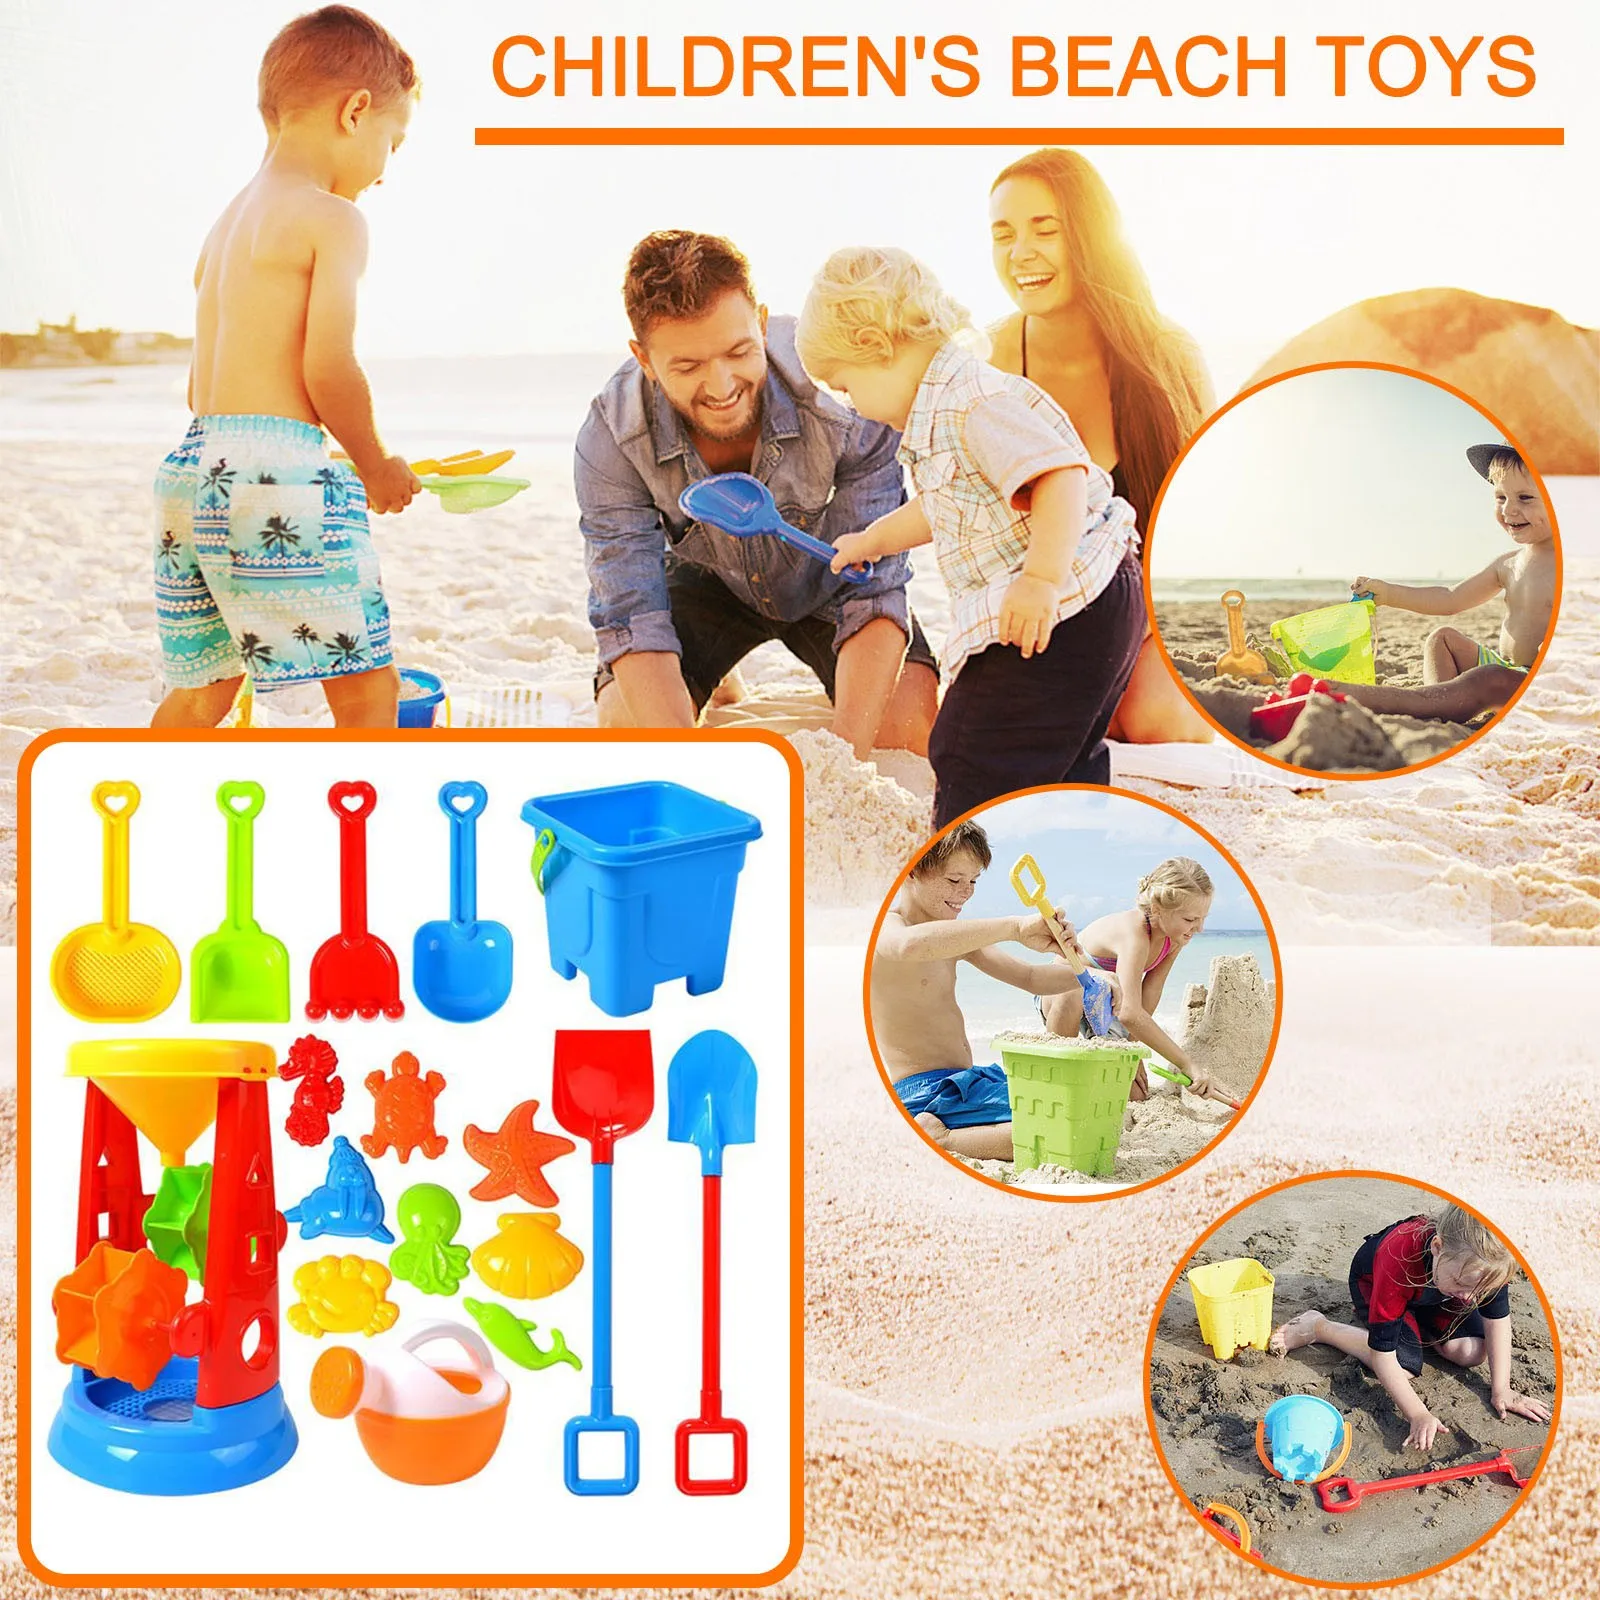 

17 Piece Beach Toy Sand Set Sand Play Sandpit Toy Summer Outdoor Toy Toys Juguetes Playa Jouet Plage Пляжные Игрушки Для Пляжа